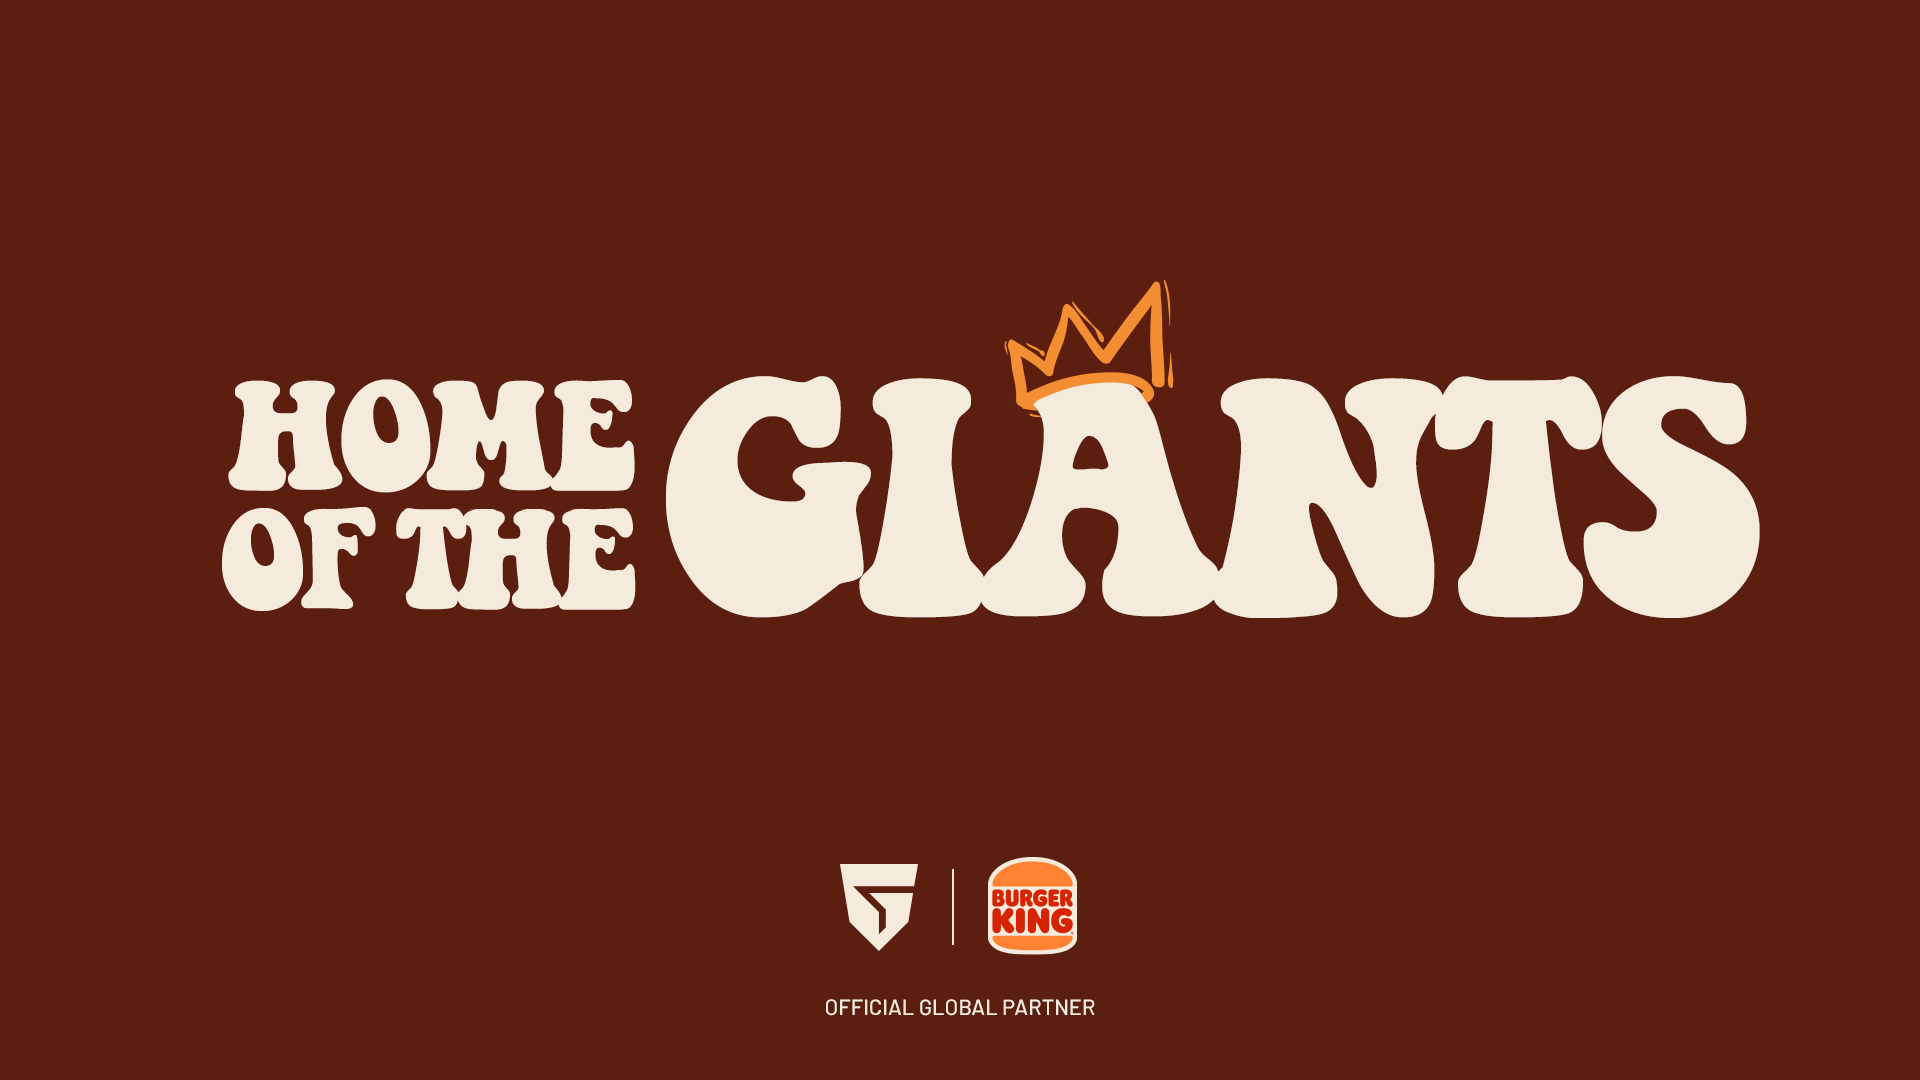 Giants burger king 